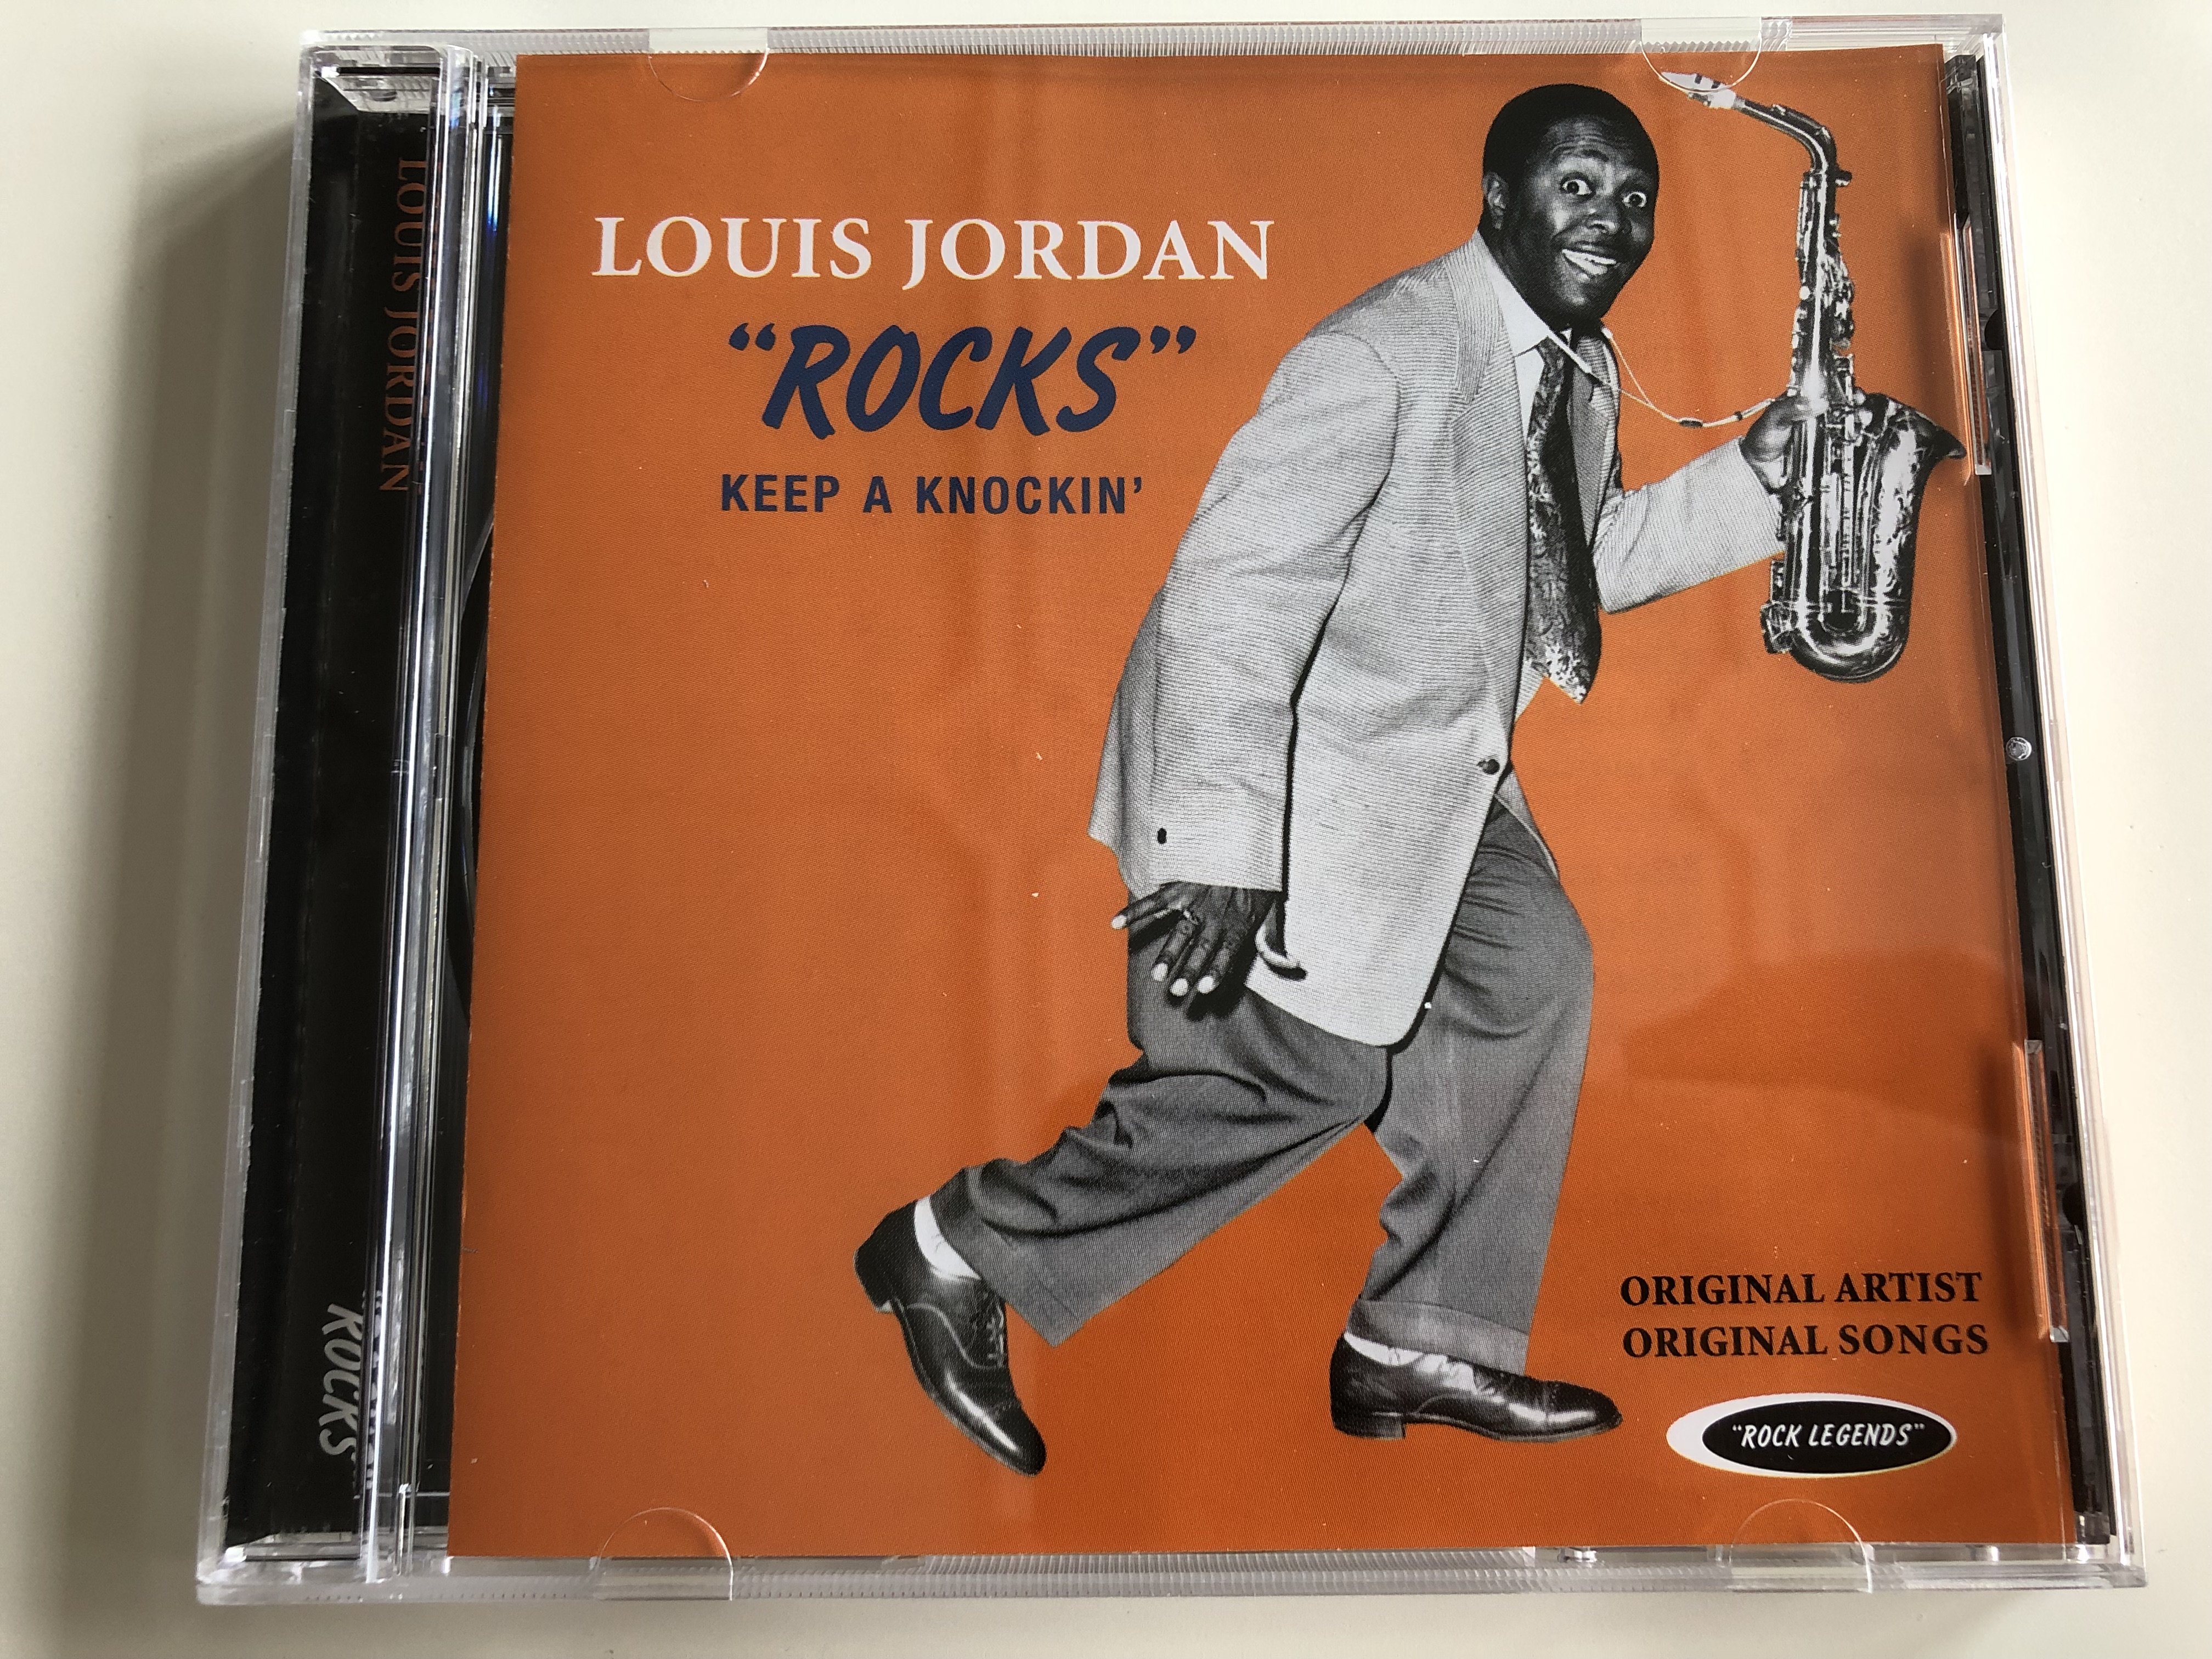 louis-jordan-rocks-keep-a-knockin-original-artist-original-songs-audio-cd-2006-si-903642-disky-1-.jpg